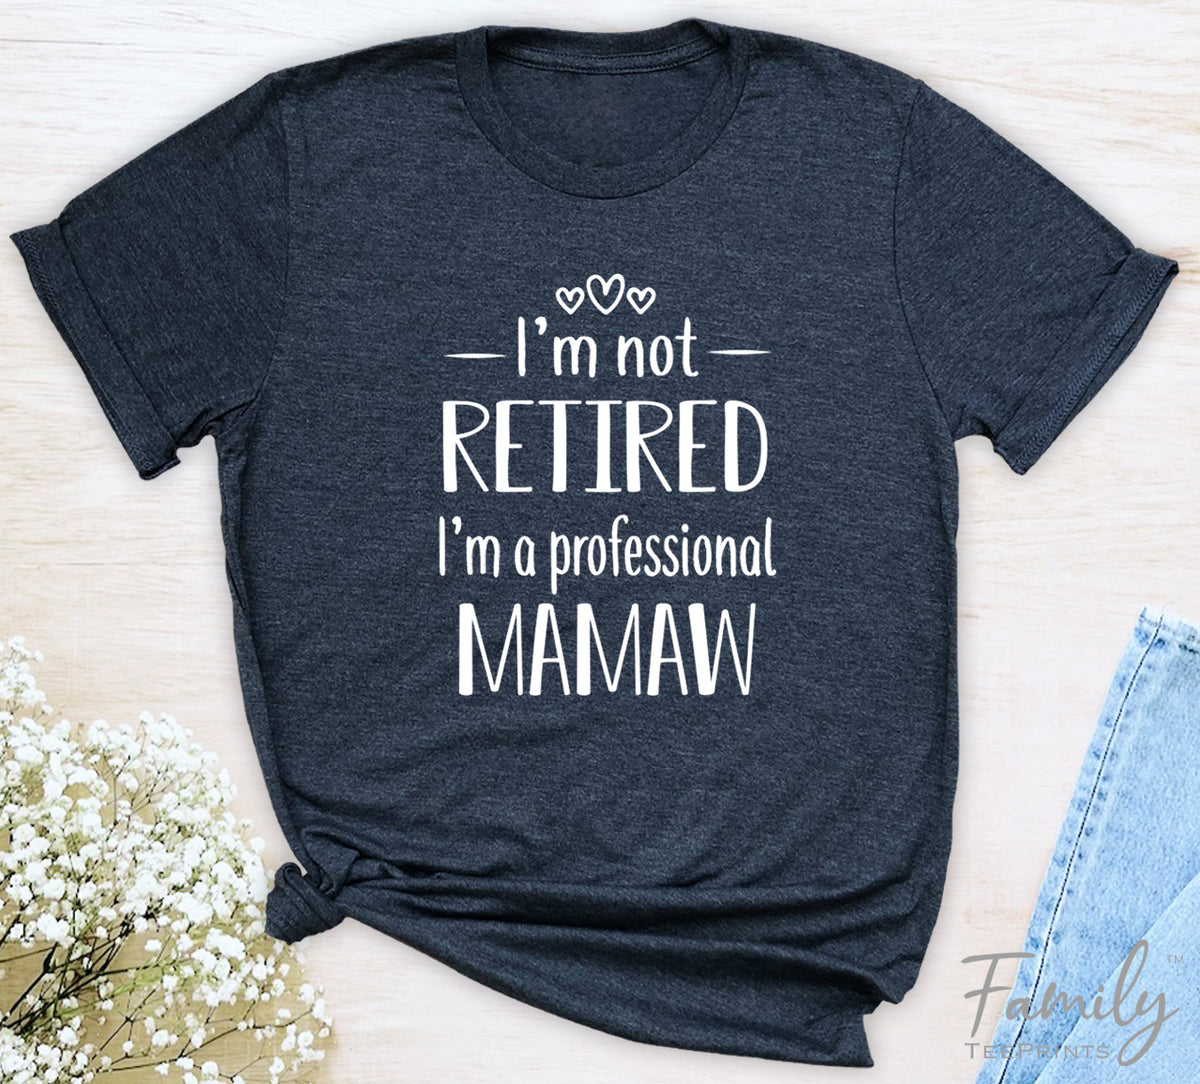 I'm Not Retired I'm A Professional Mamaw - Unisex T-shirt - Mamaw Shirt - Gift For Mamaw